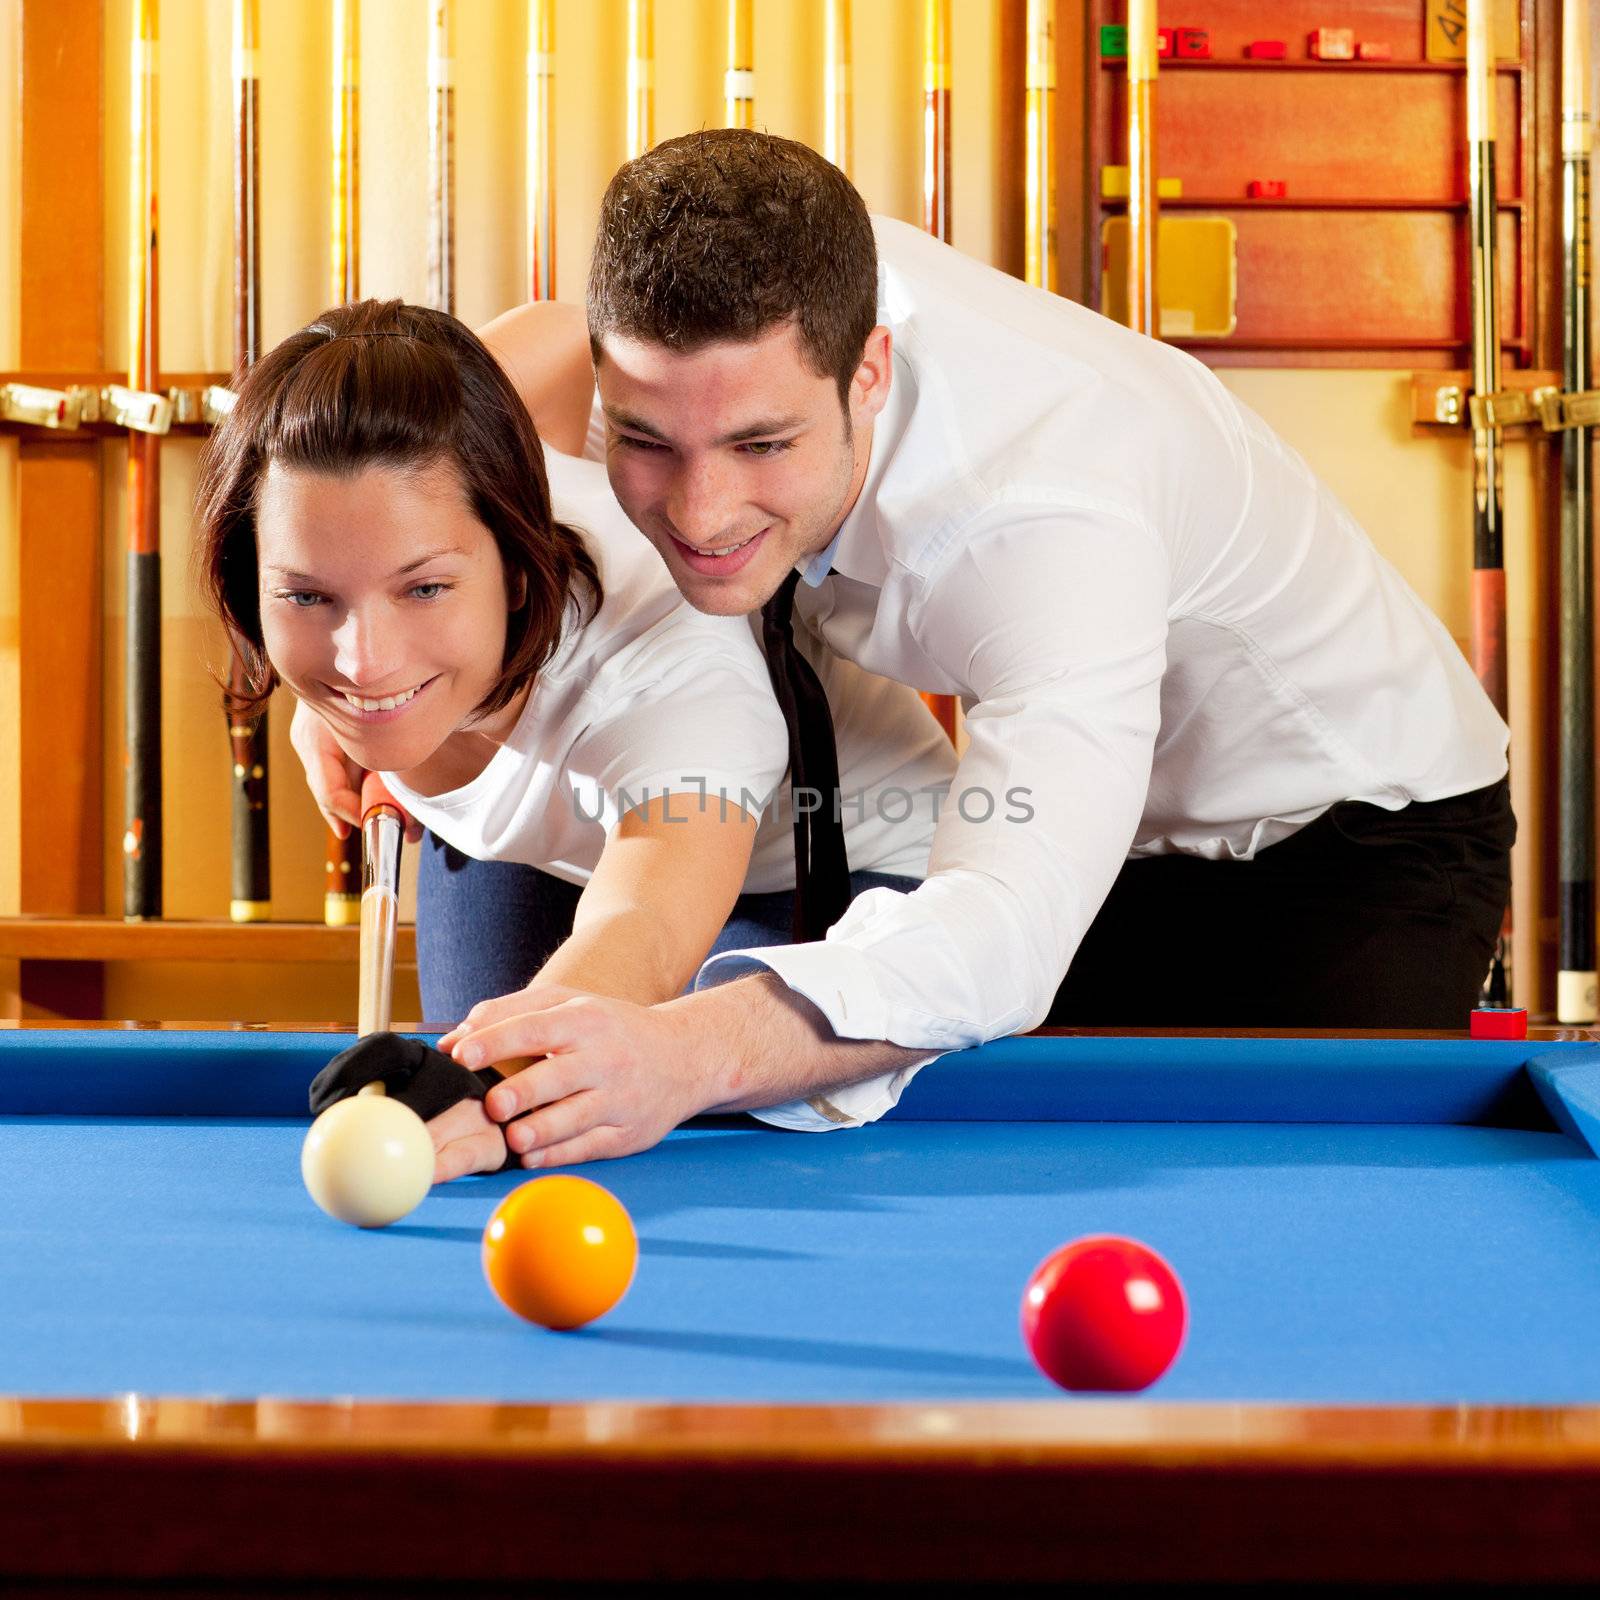 couple playing billiard expertise teacher by lunamarina